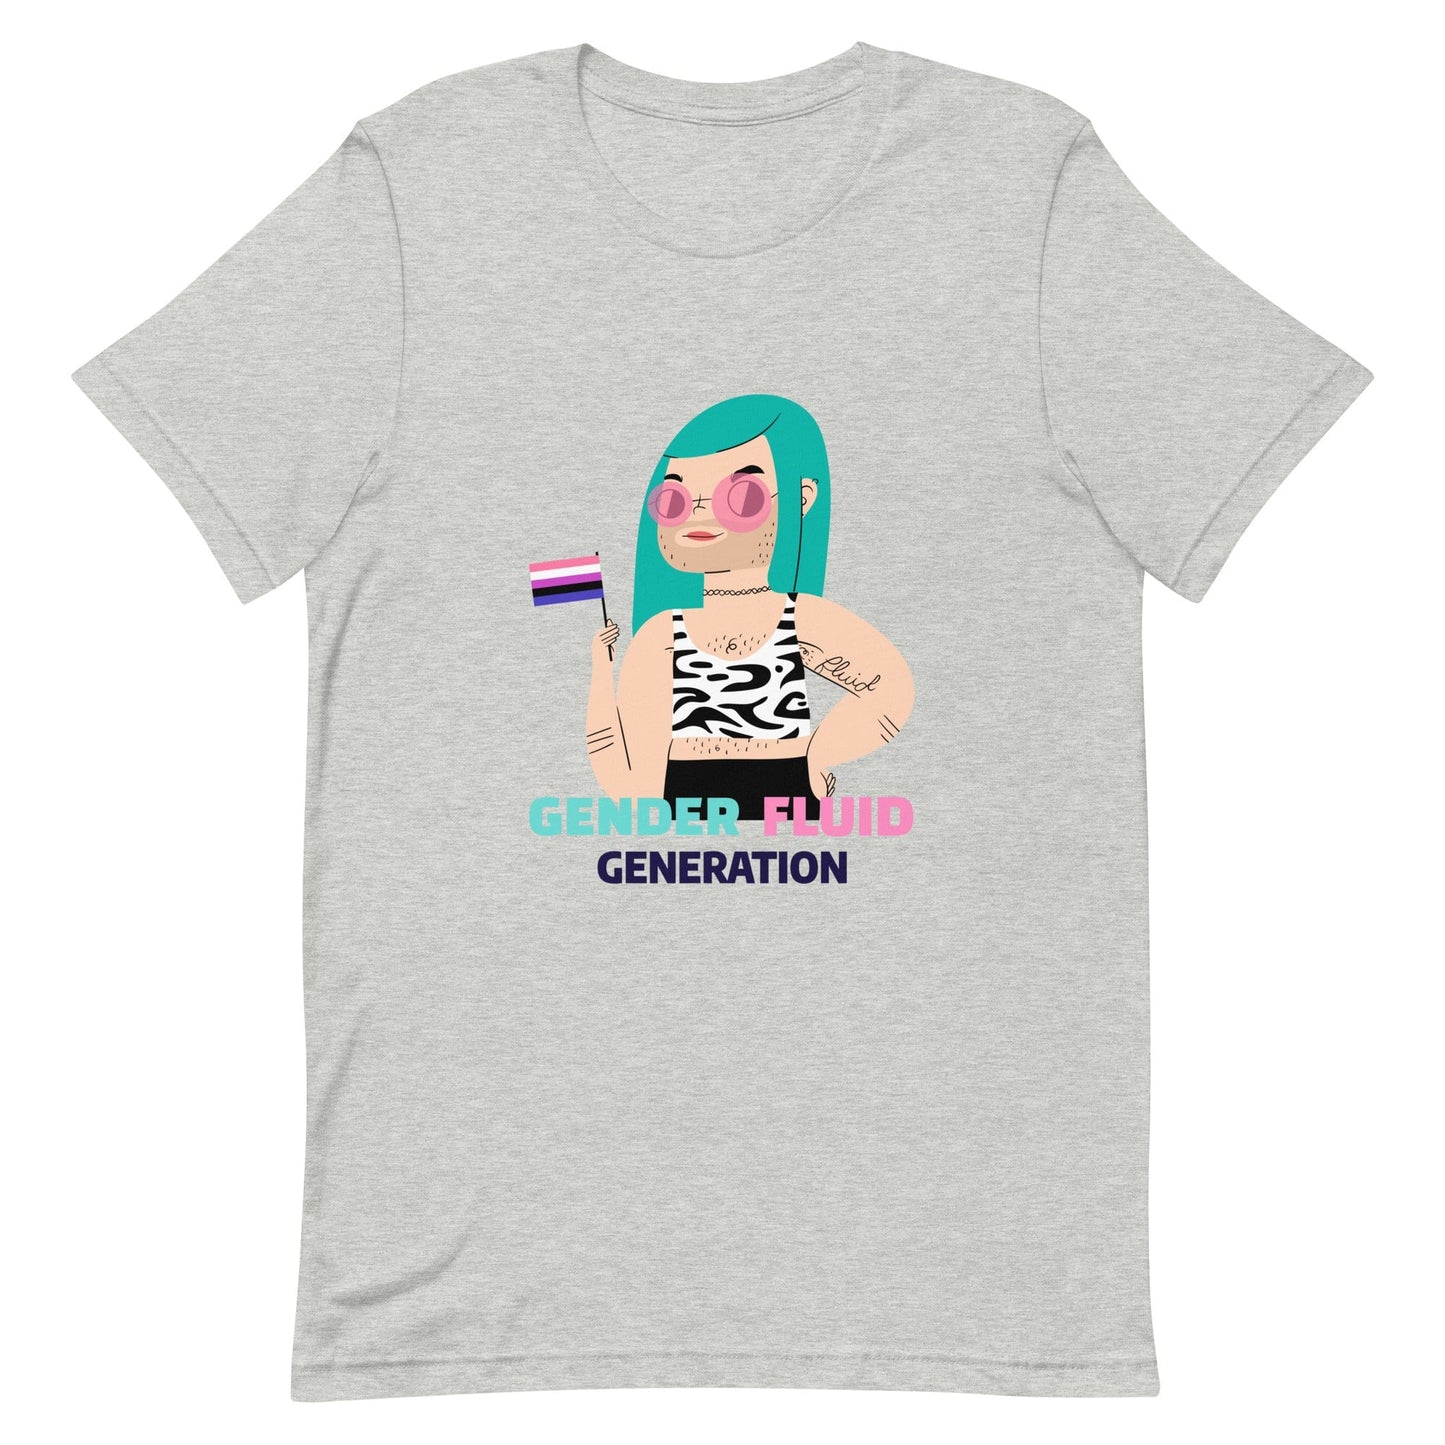 lgbtq-gender-fluid-generation-queer-tshirt-grey-at-feminist-define